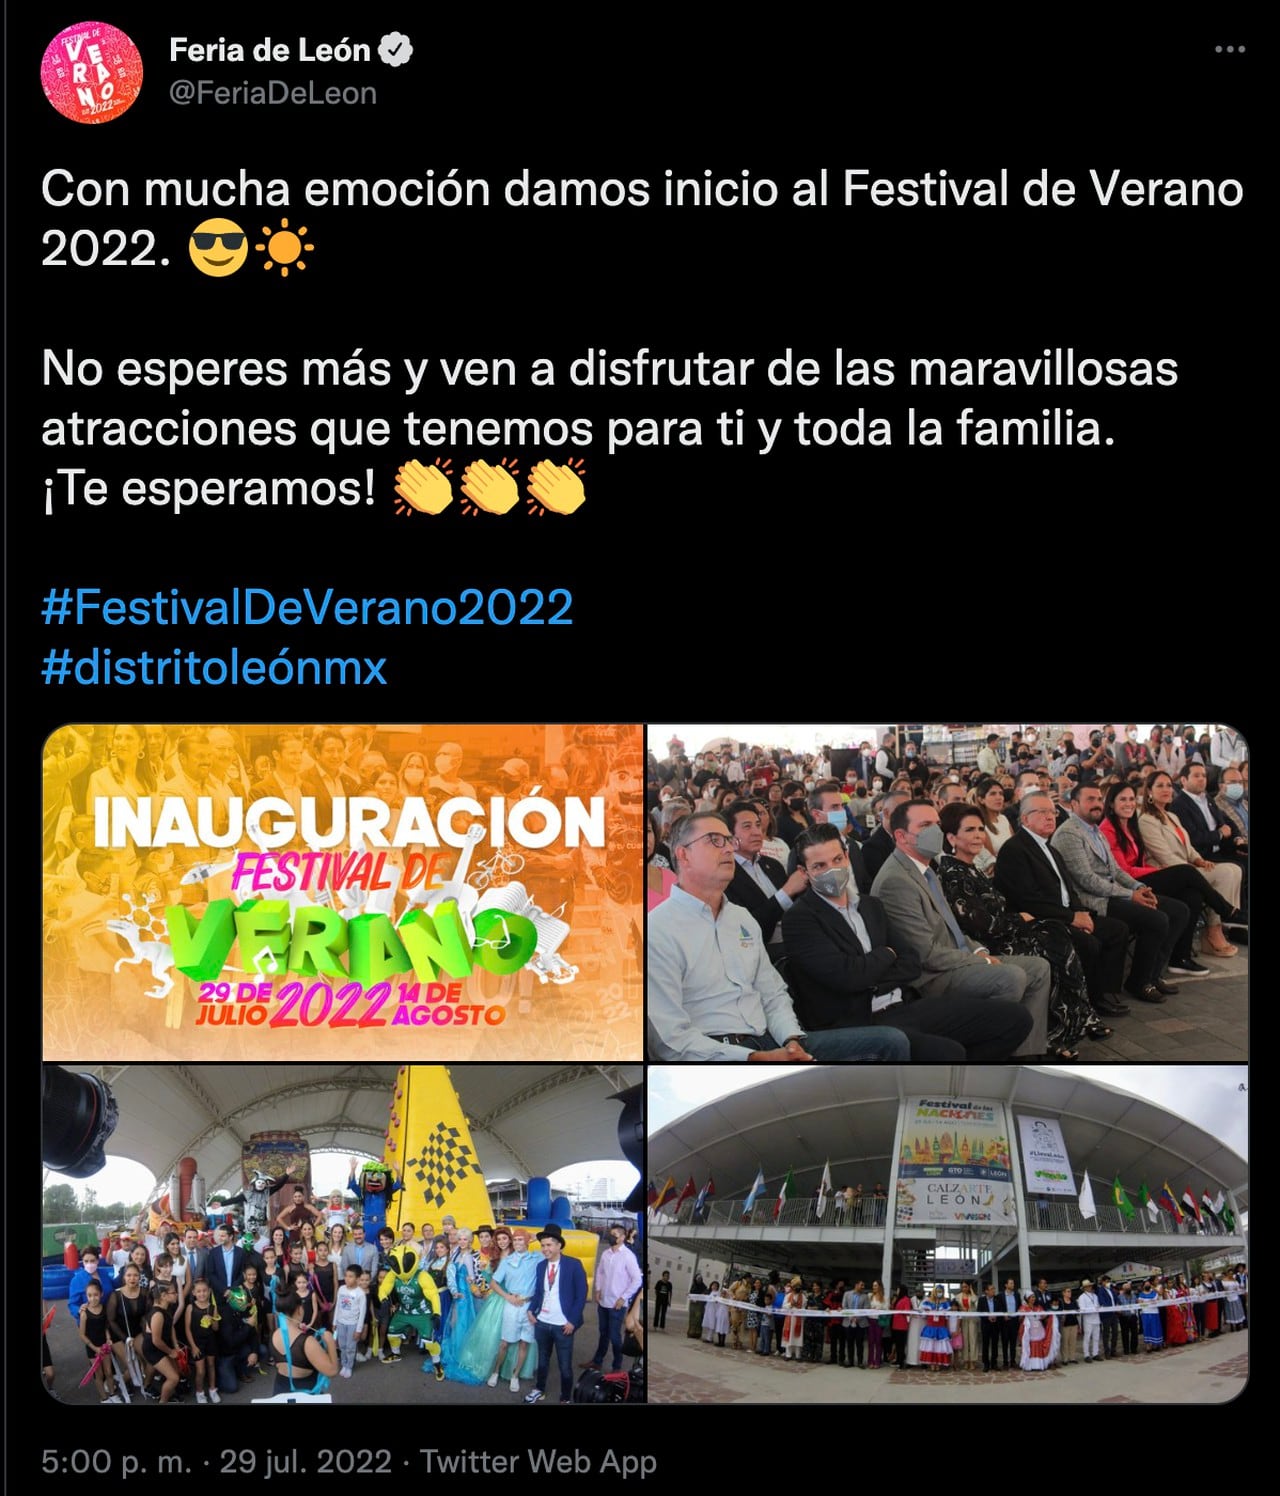 Festival de Verano 2022 se inaugura en León, Guanajuato; impulsa la